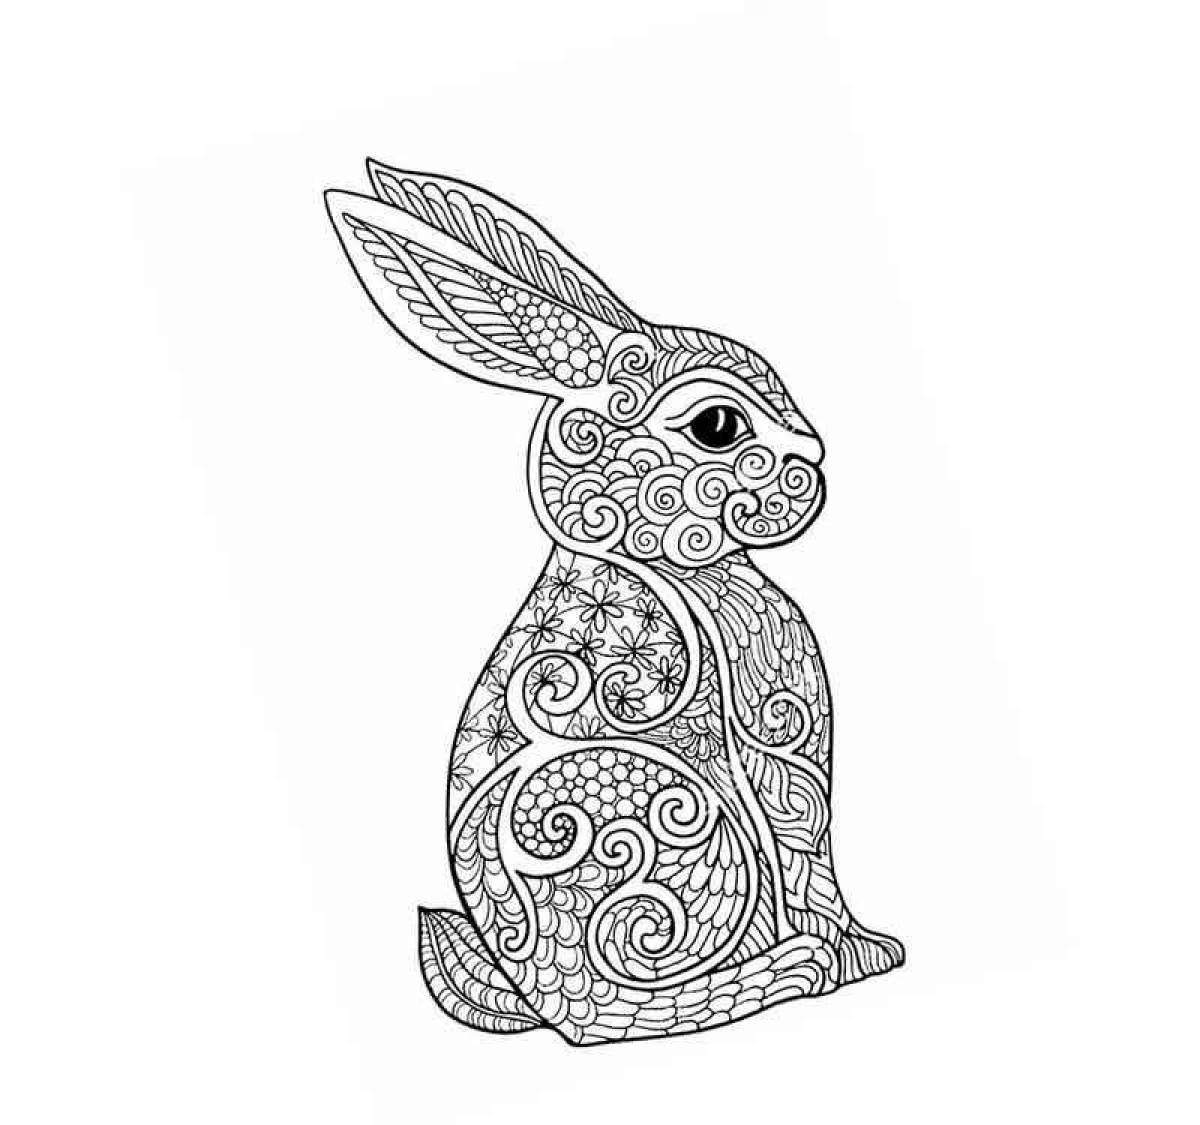 Adorable anti-stress rabbit coloring book